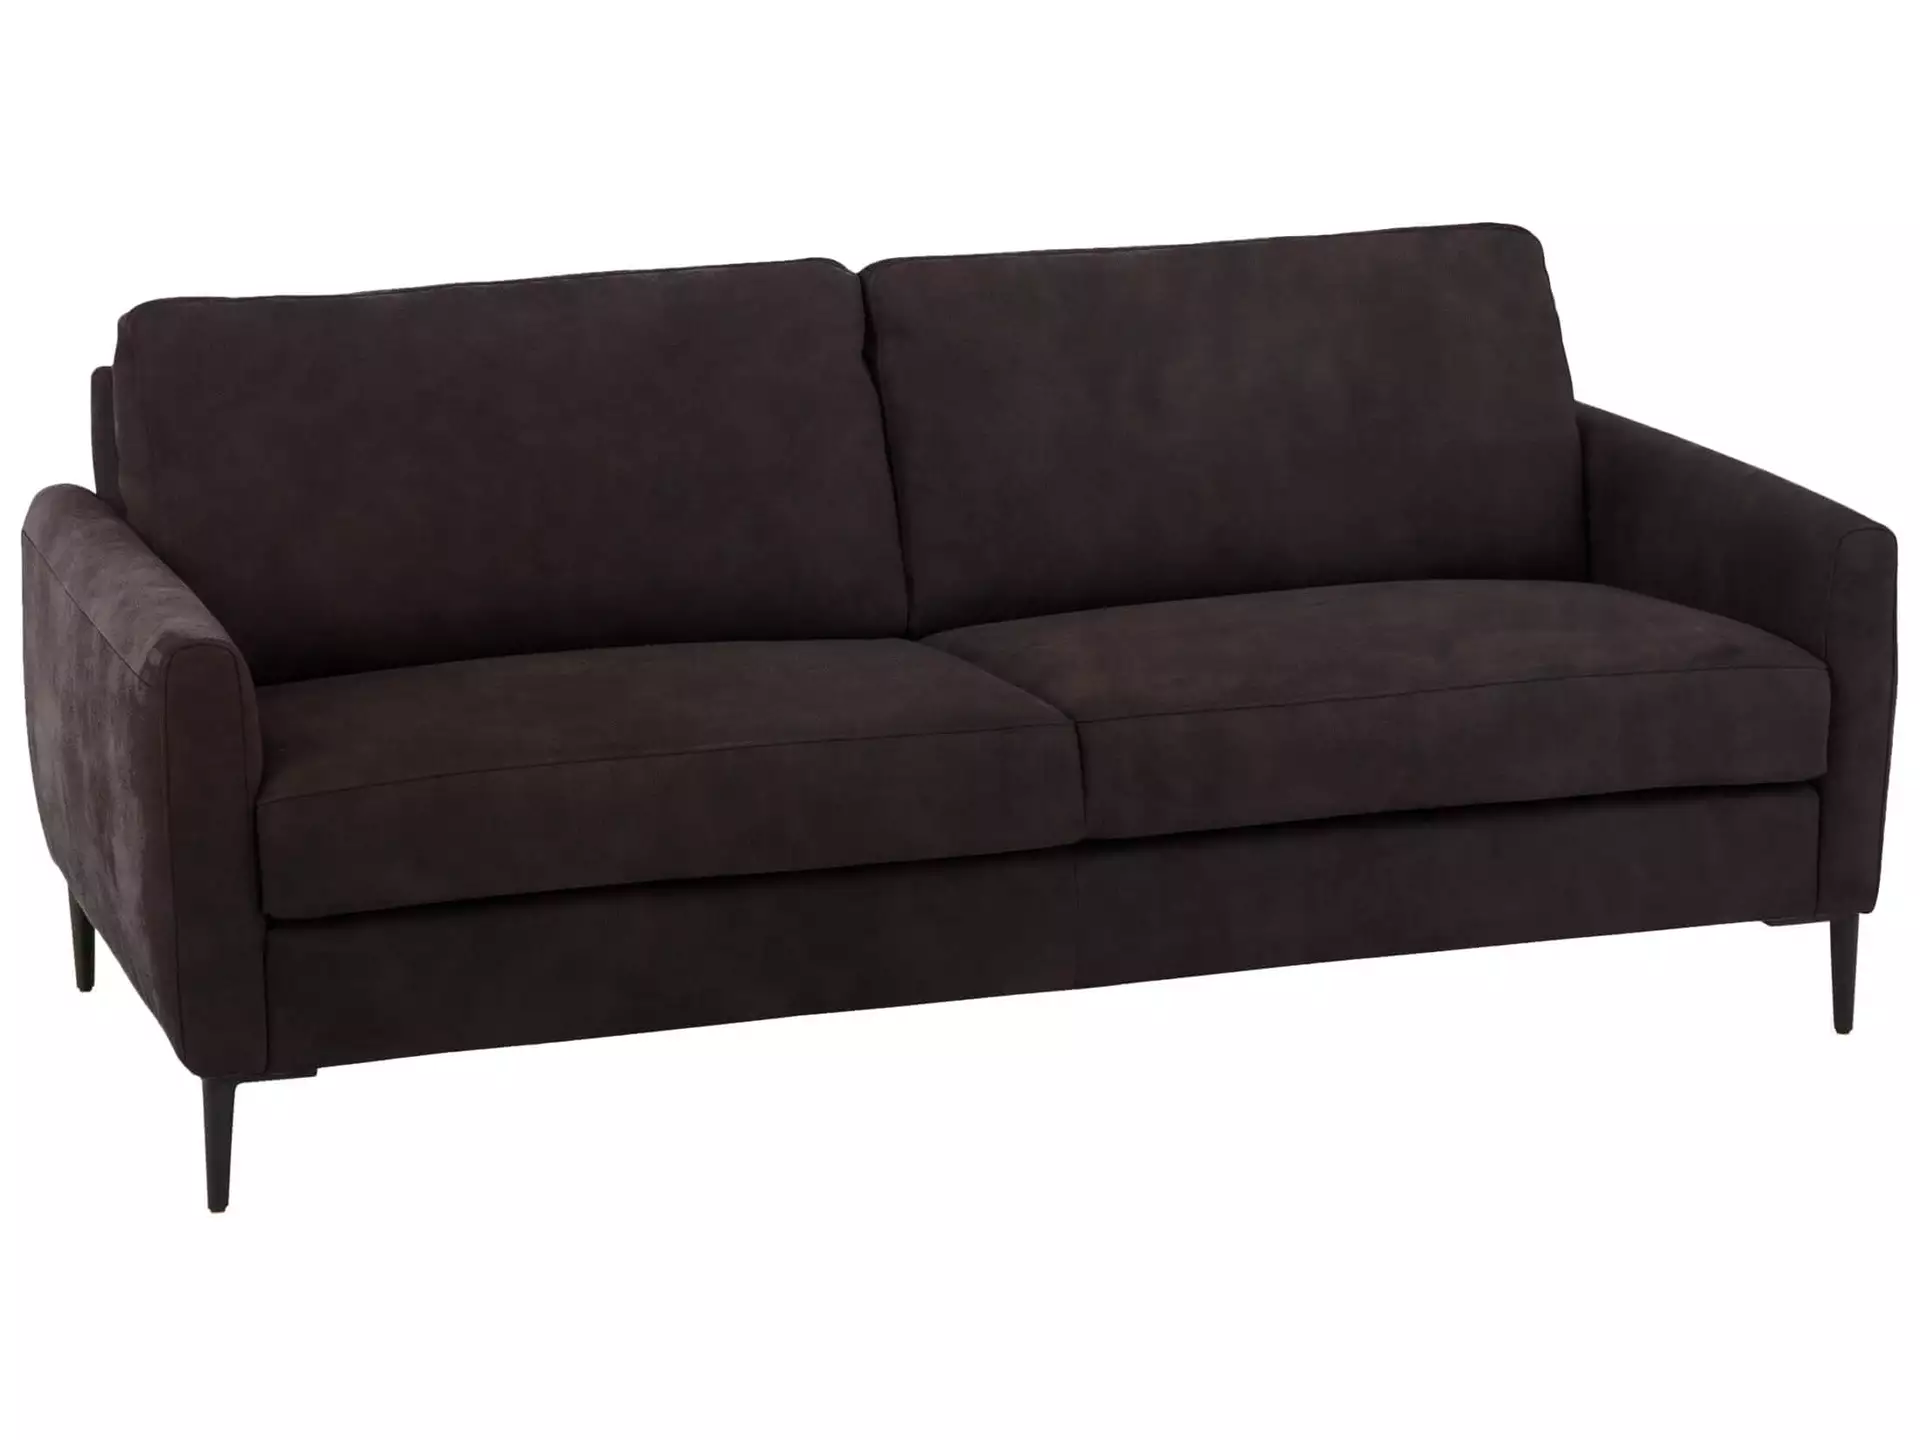 Sofa Antonio Basic B: 176 cm Schillig Willi / Farbe: Braun / Material: Leder Basic